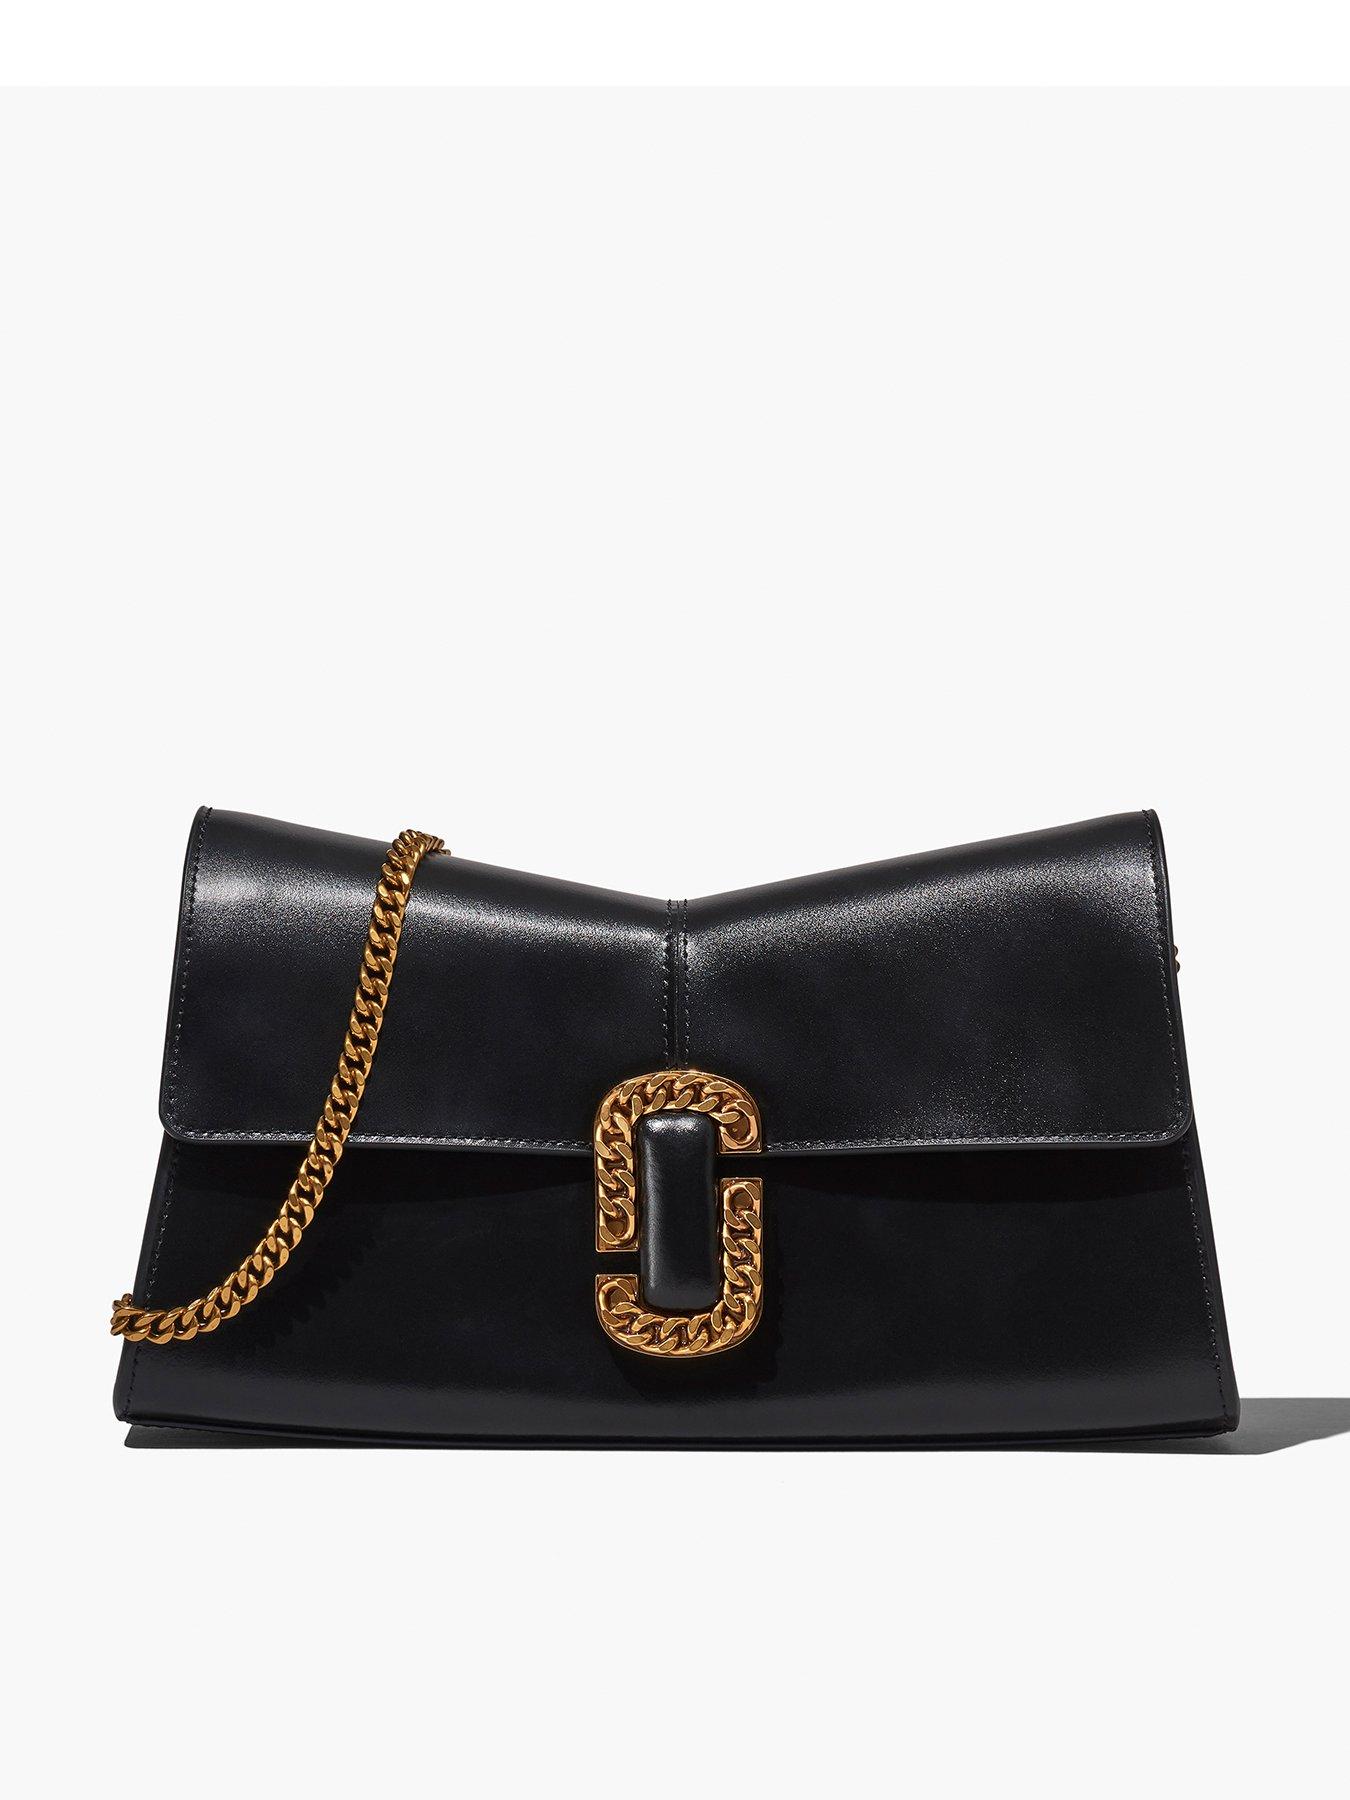 Womens Evening Clutch Bag Designer Evening Handbag,Lady Party Clutch Purse,  Great Gift Choice : Amazon.in: Fashion